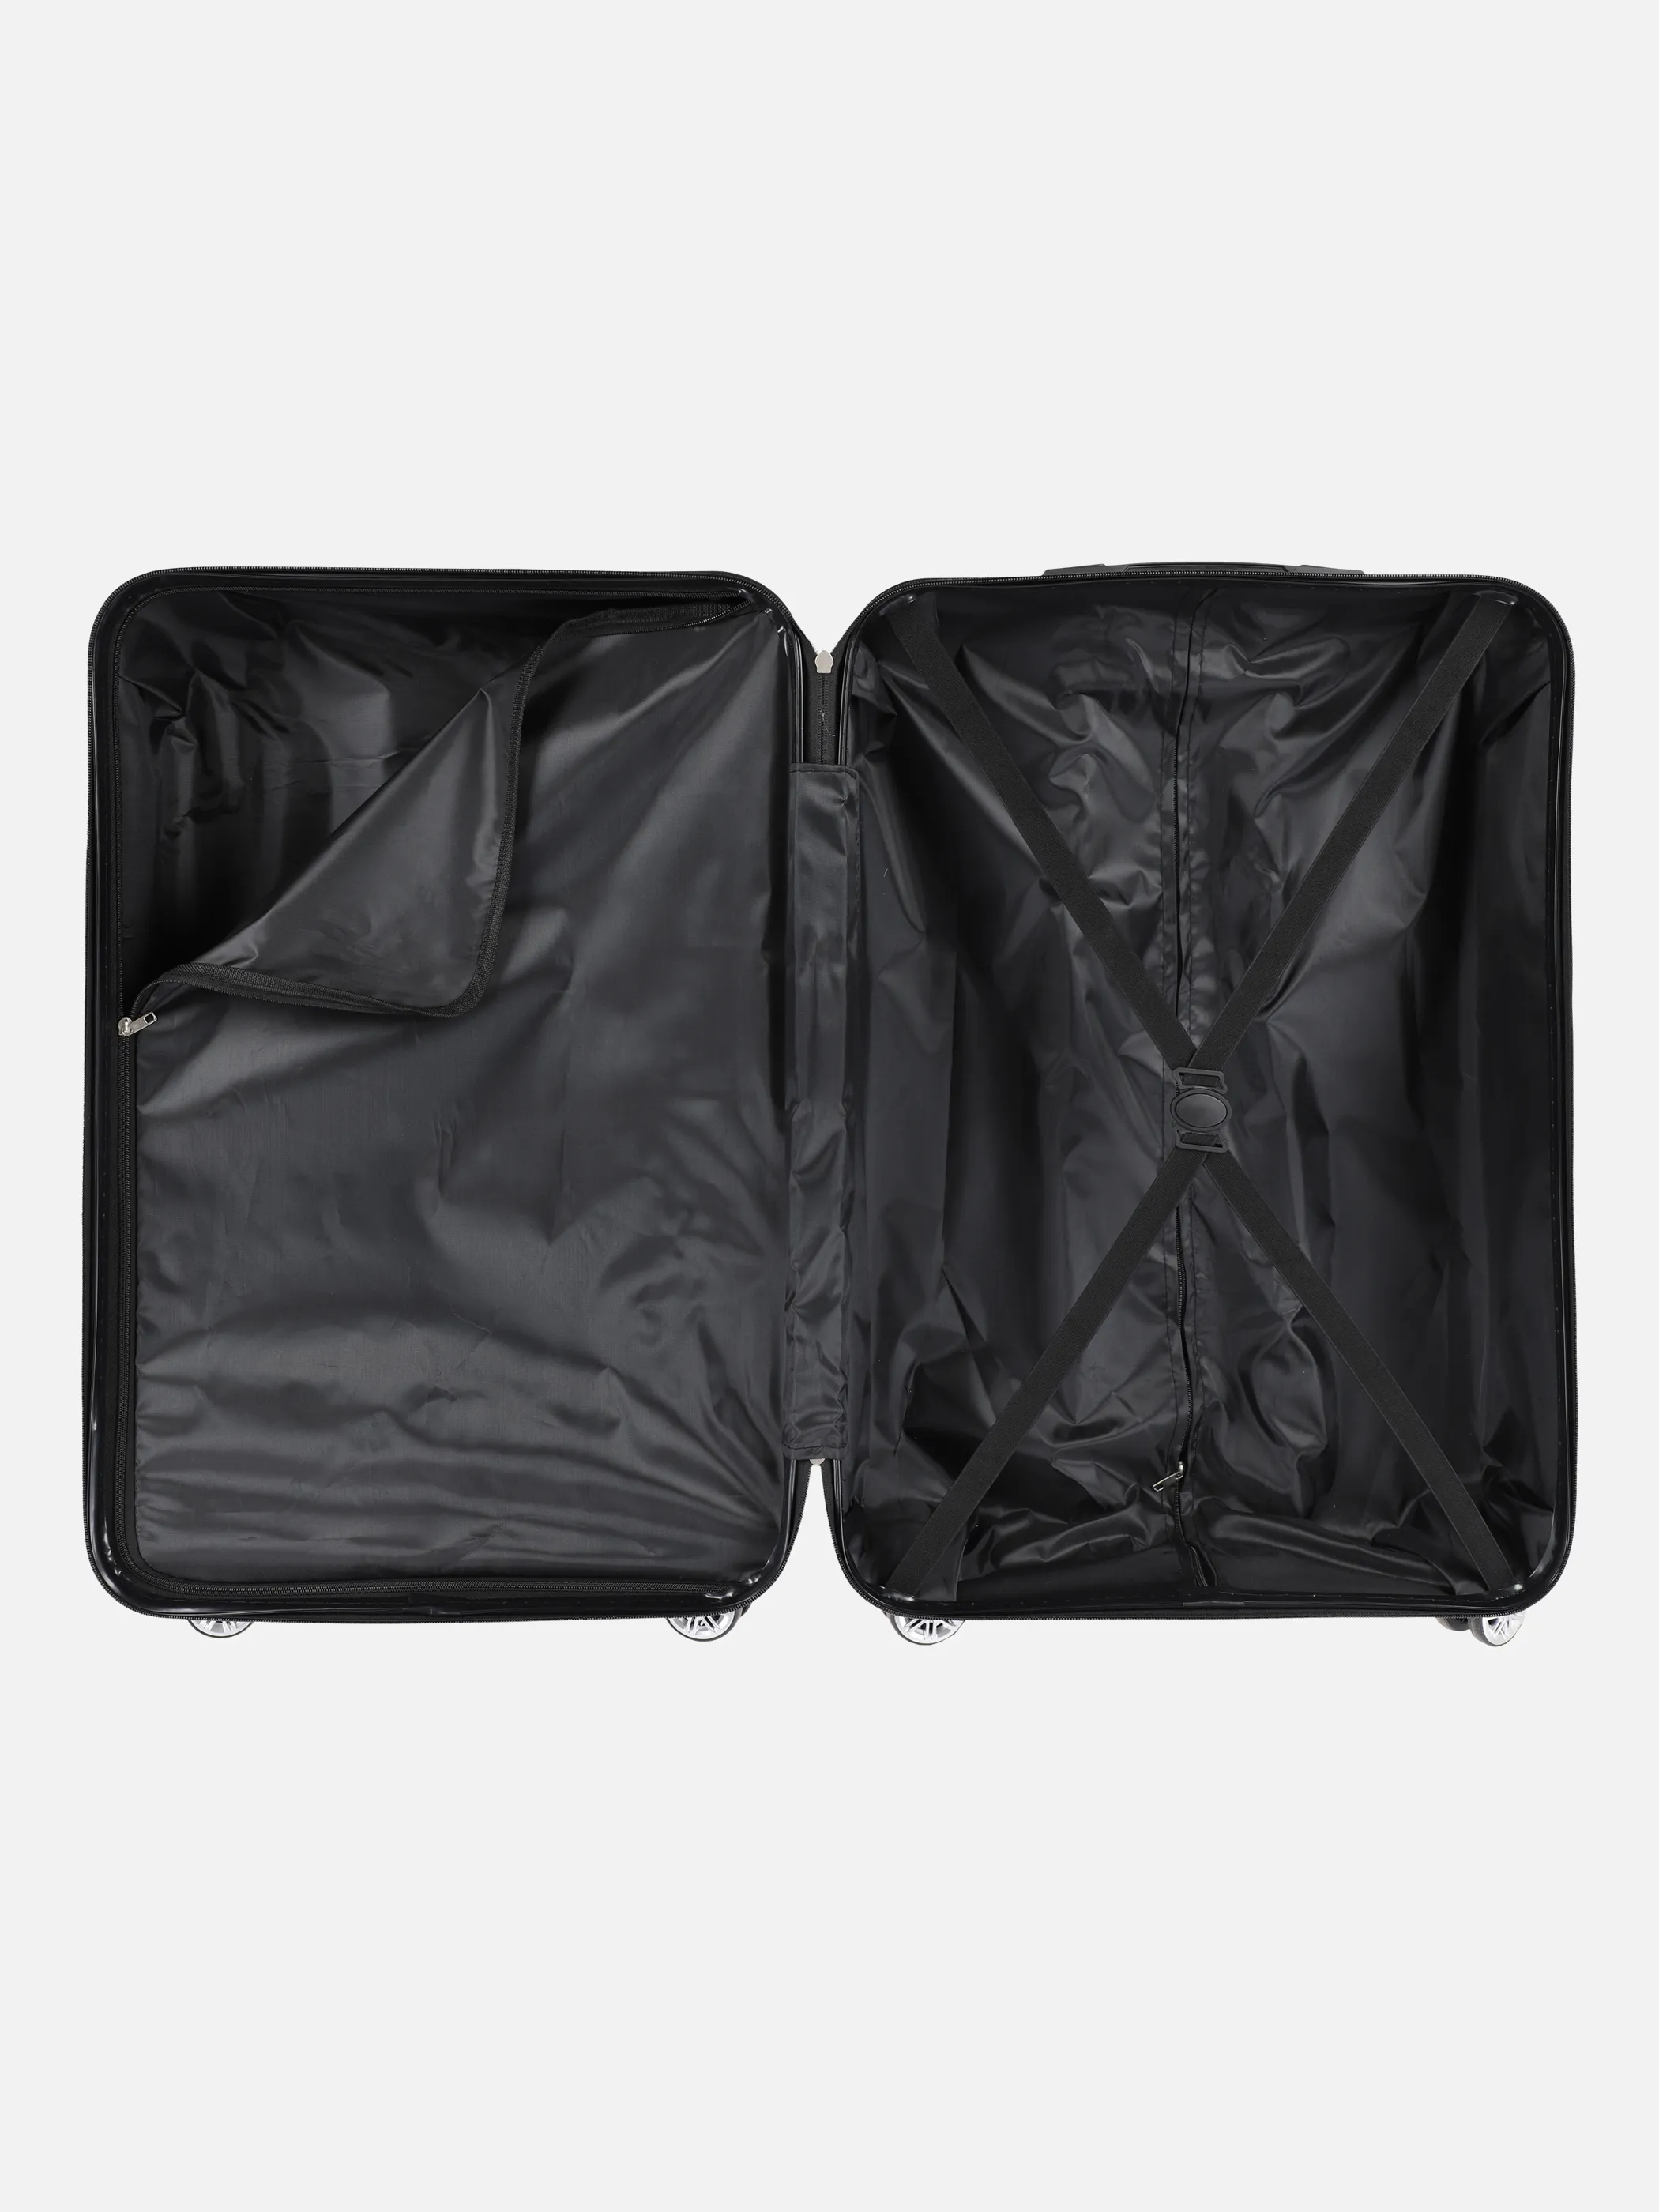 Koffer/Taschen Koffer Avalon Gr. L 76x50x30 Grau 878832 SILBER 3